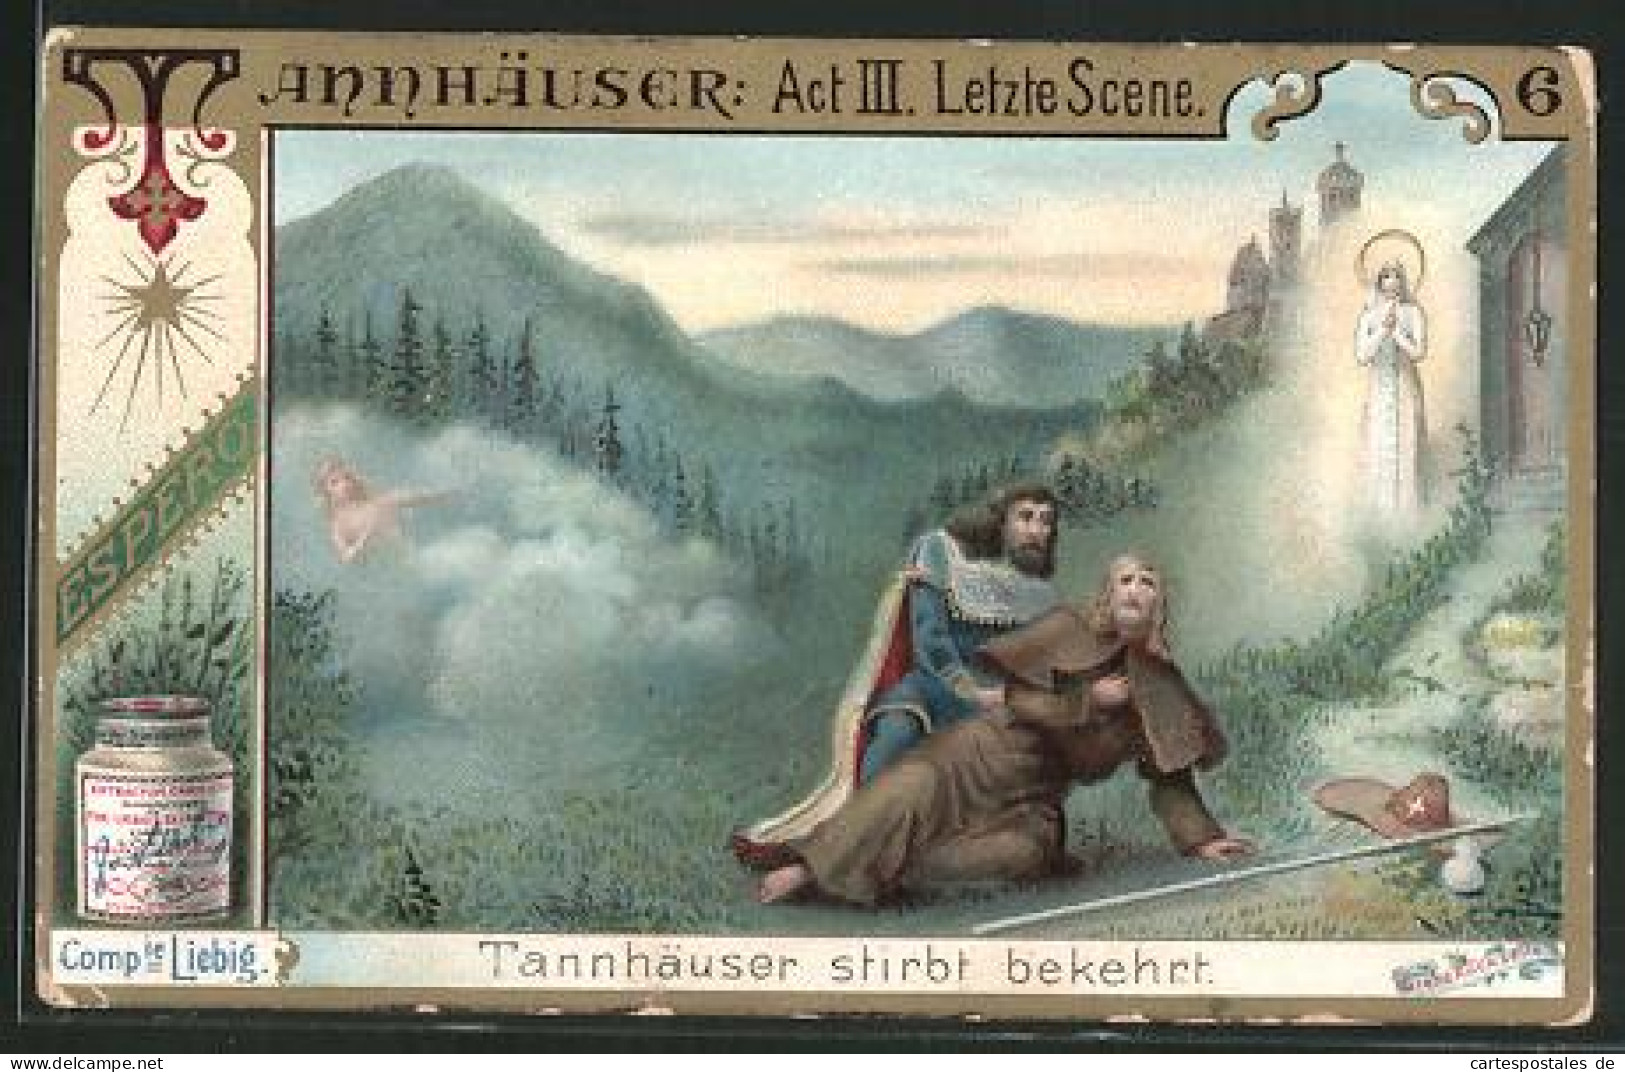 Sammelbild Liebig, Tannhäuser, Act III. Letzte Szene, Tod  - Liebig